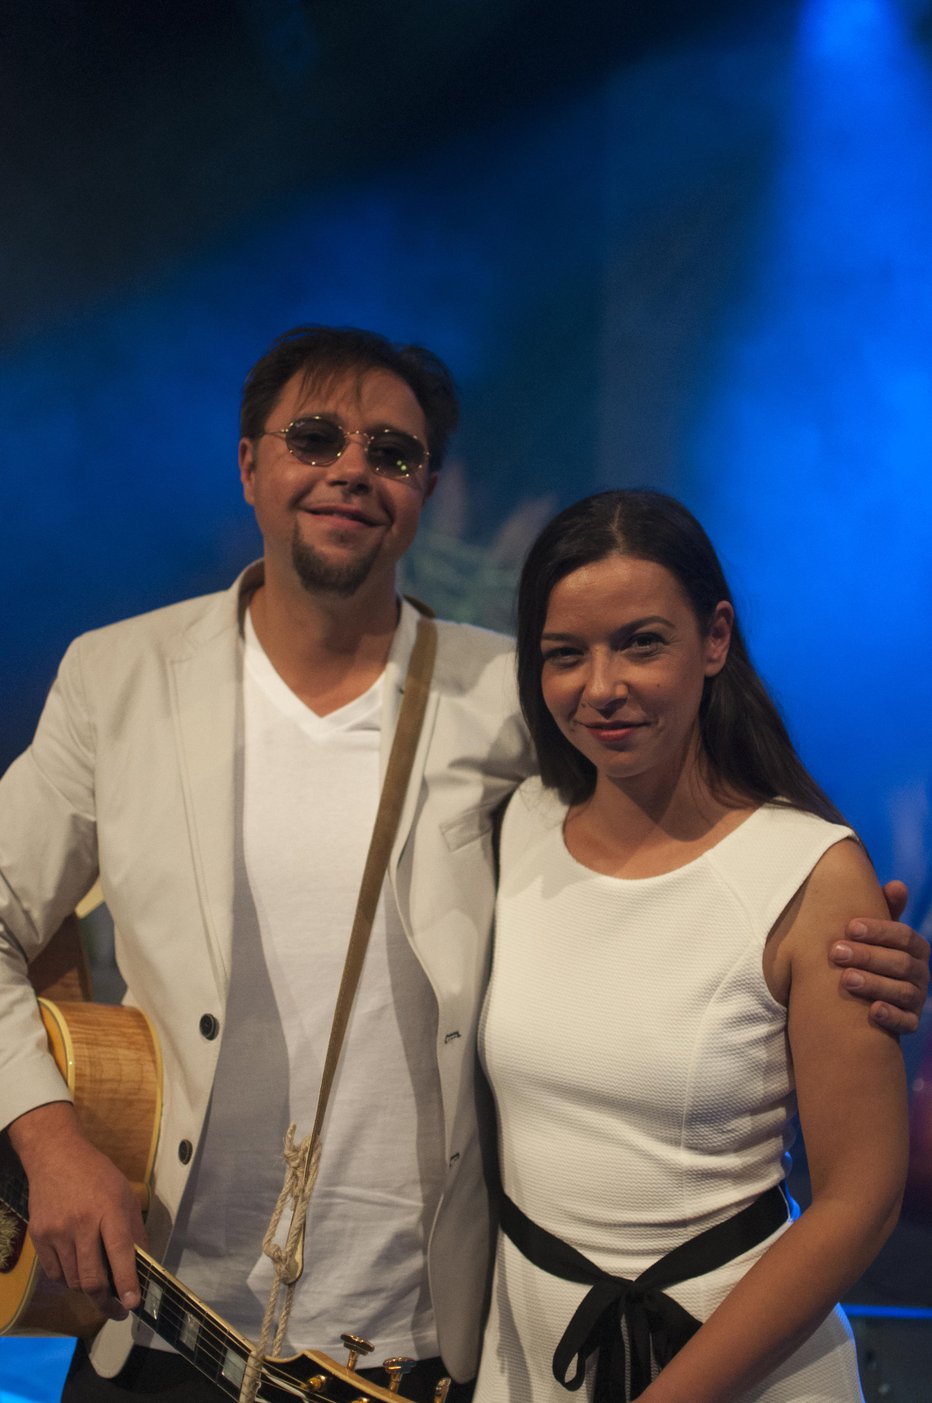 Fotografija: Na četrtkovem koncertu sta Gal in Severa dokazala, da sta vrhunska glasbenika, njuna glasova pa sta terapevtska. FOTO: Jana Furman